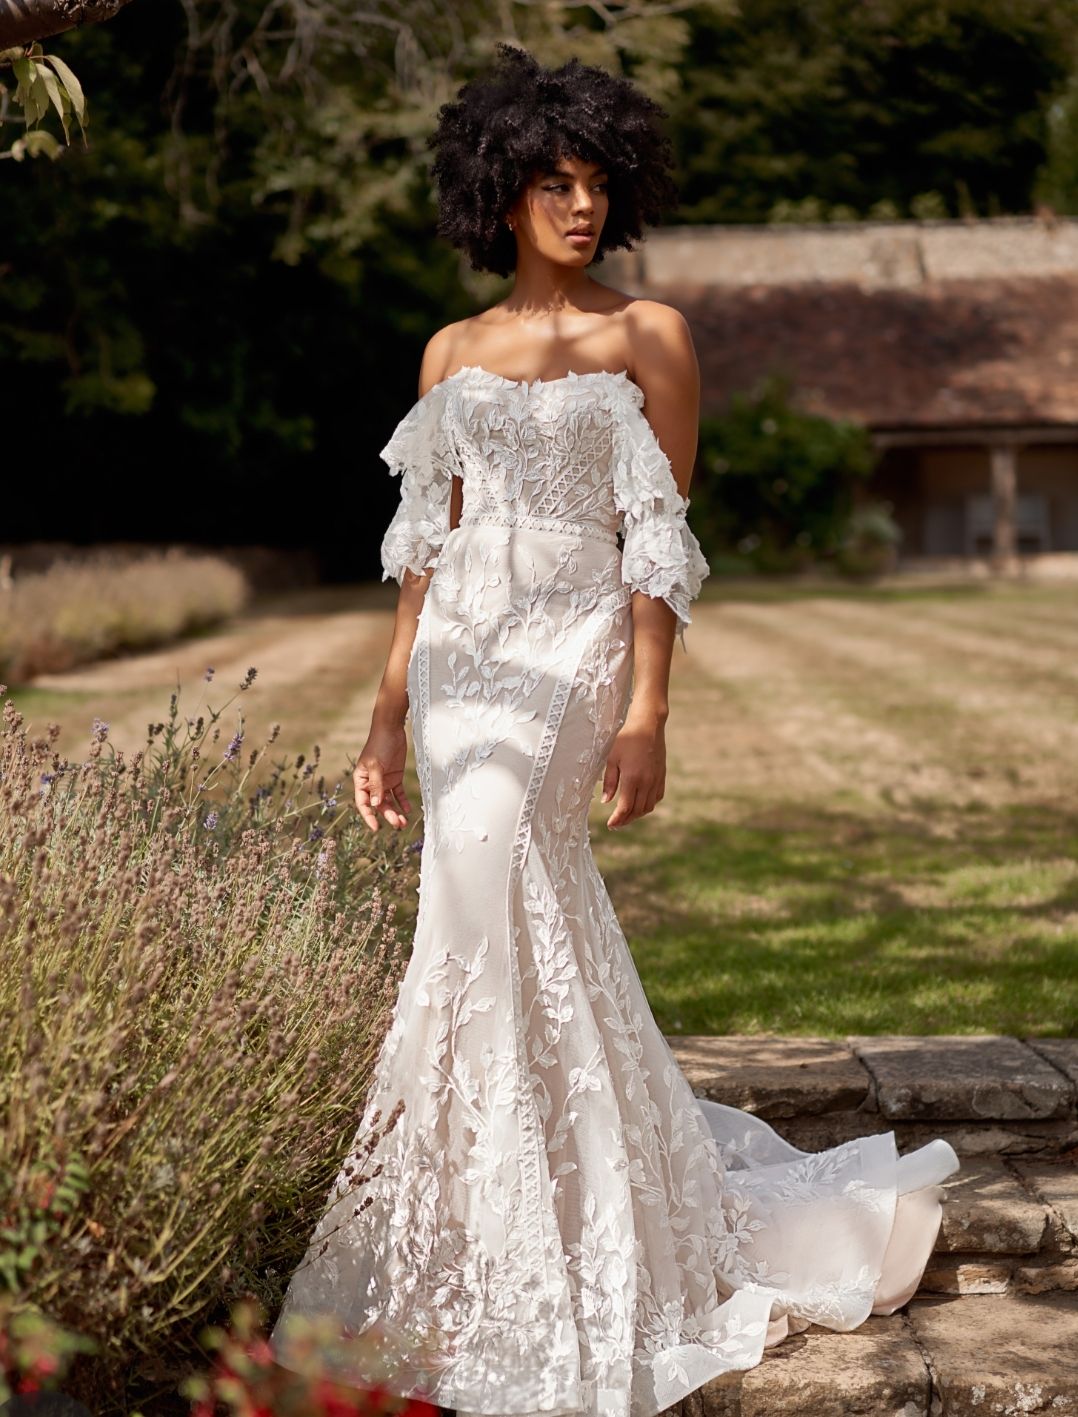 Best Dress 2 Impress Bridal-Image-27